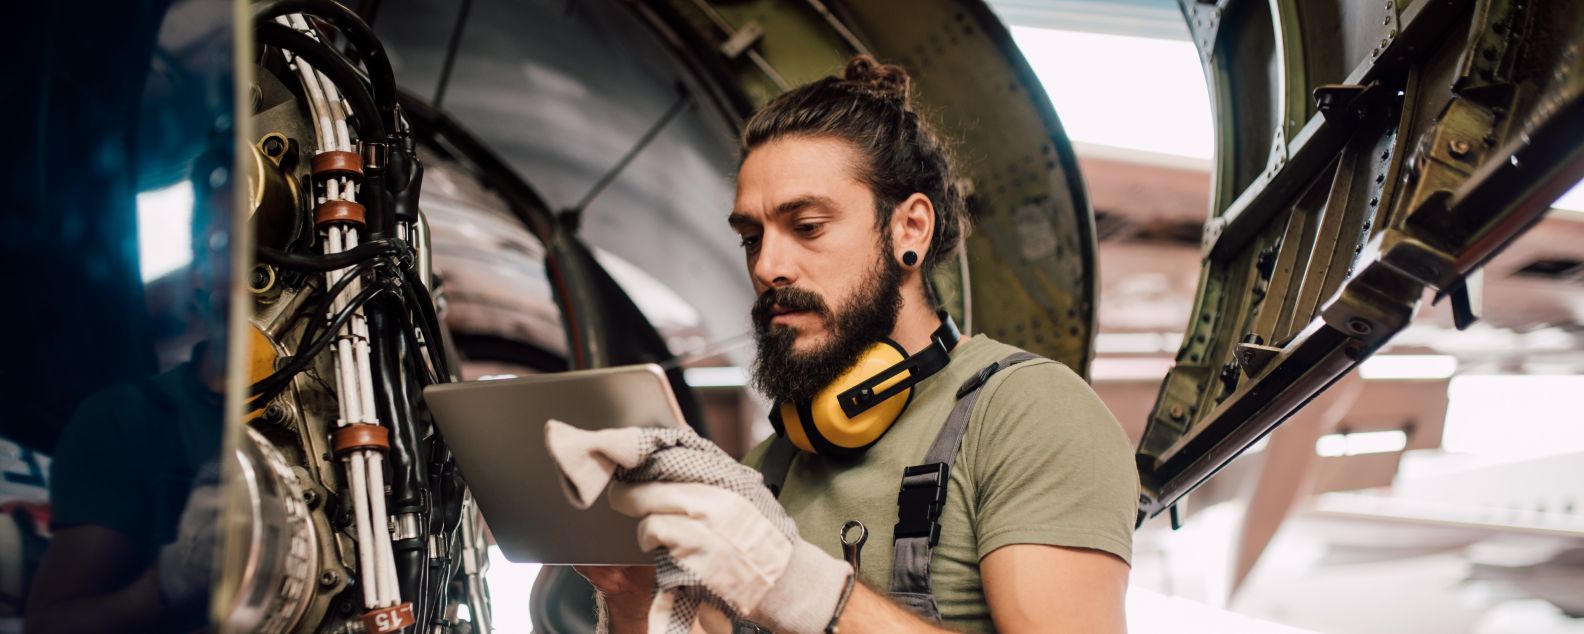 Man using digital tablet when repairing aircraft